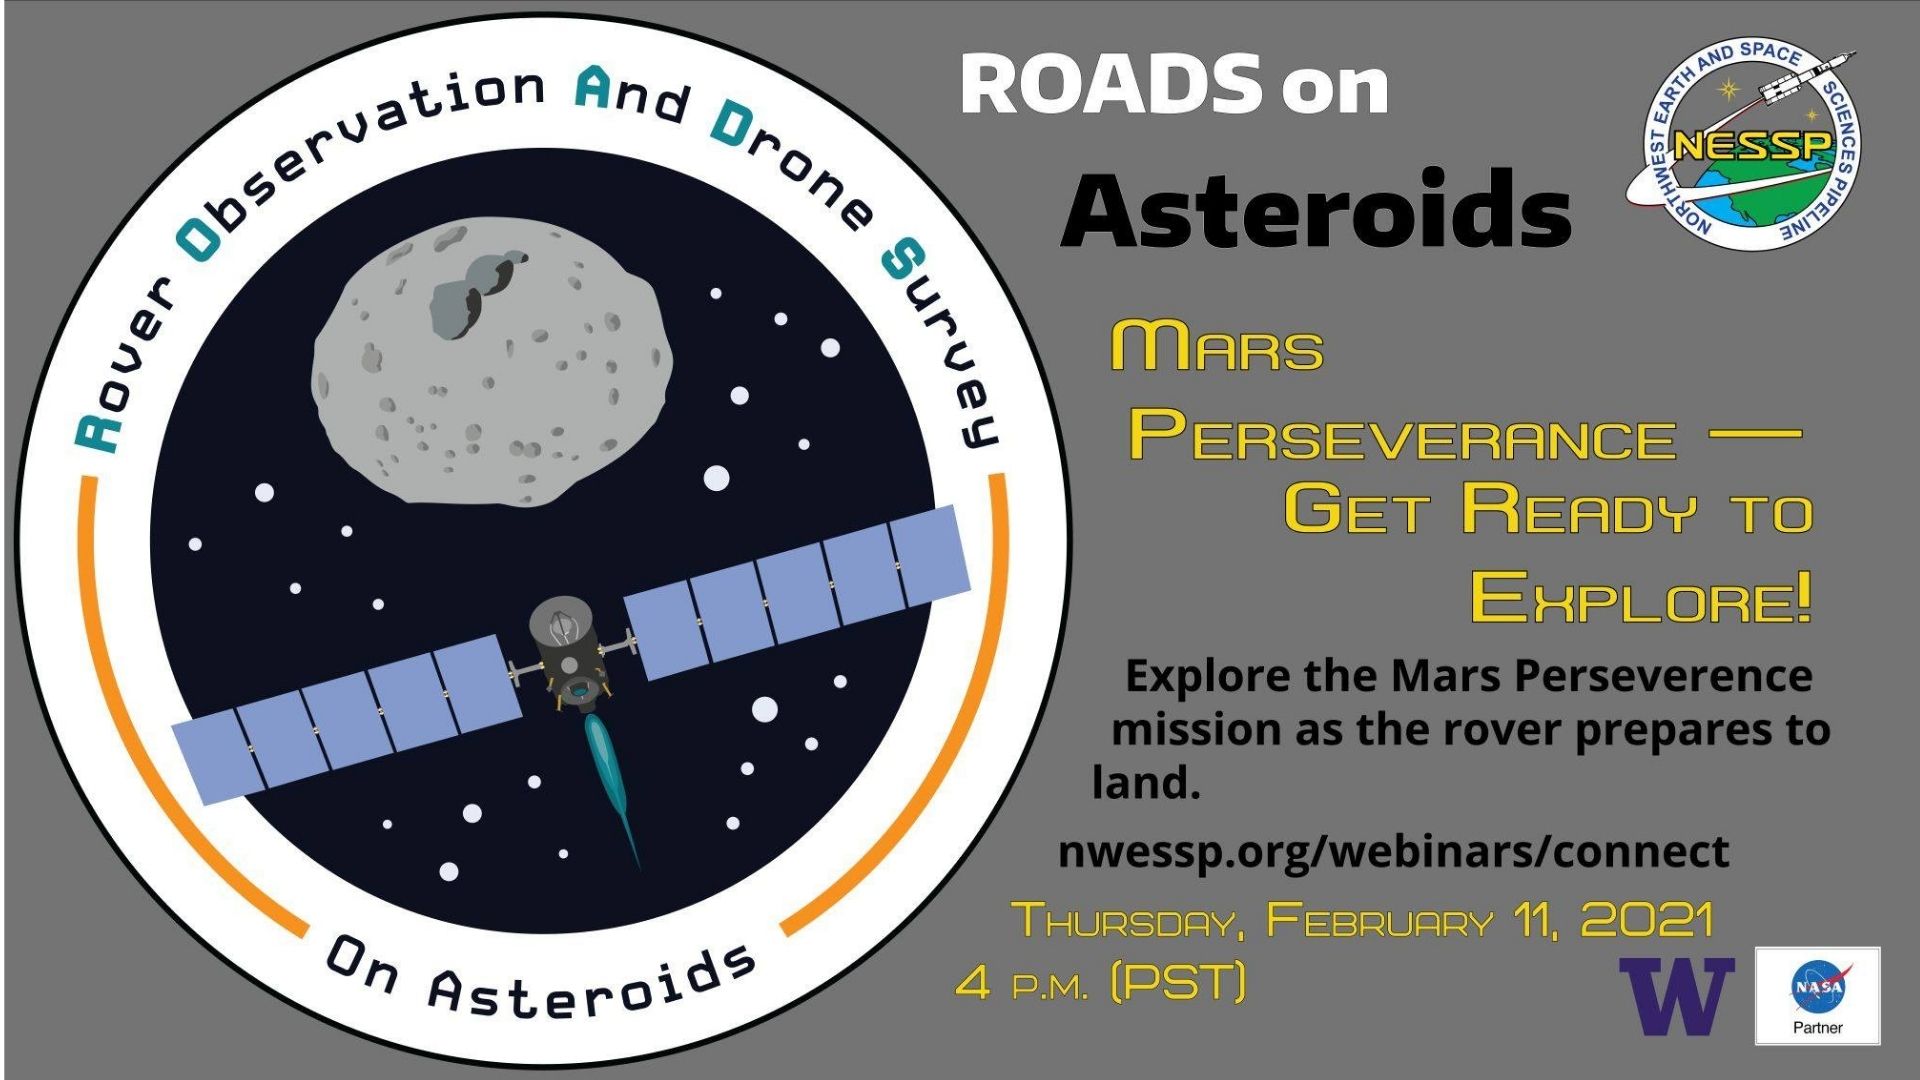 Flyer for Roads on Asteroids webinar event